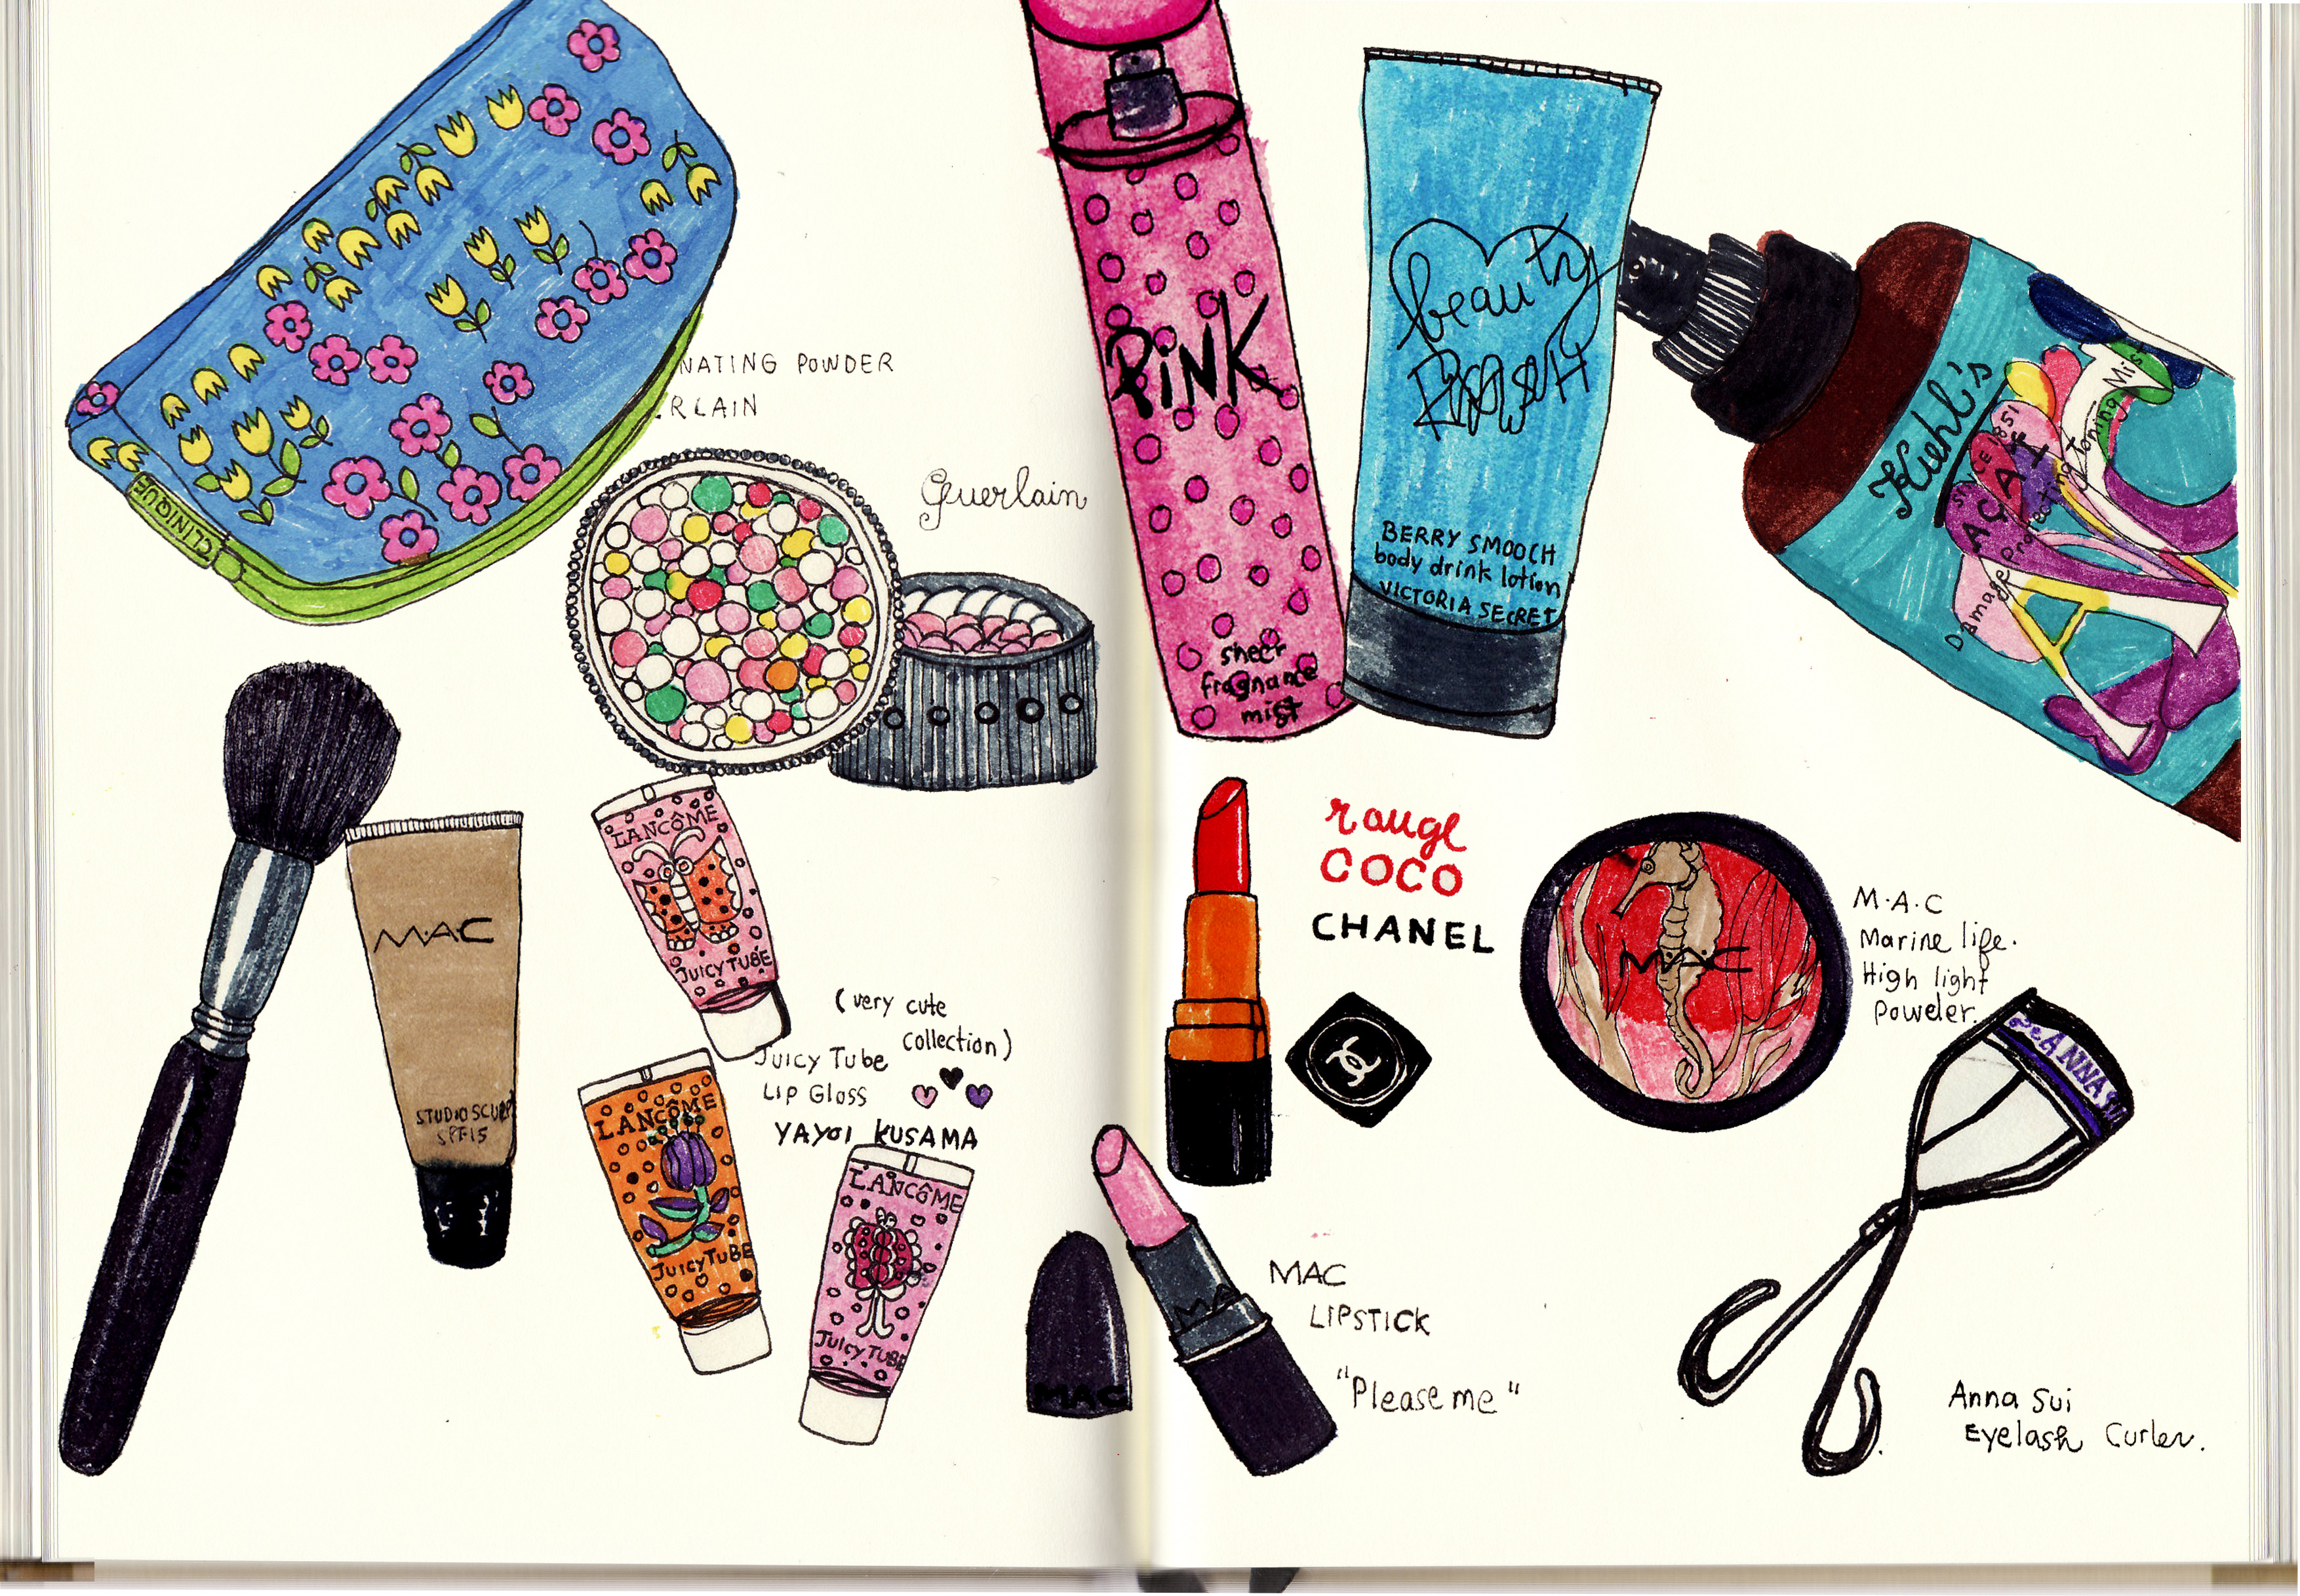 My cosmetics selection